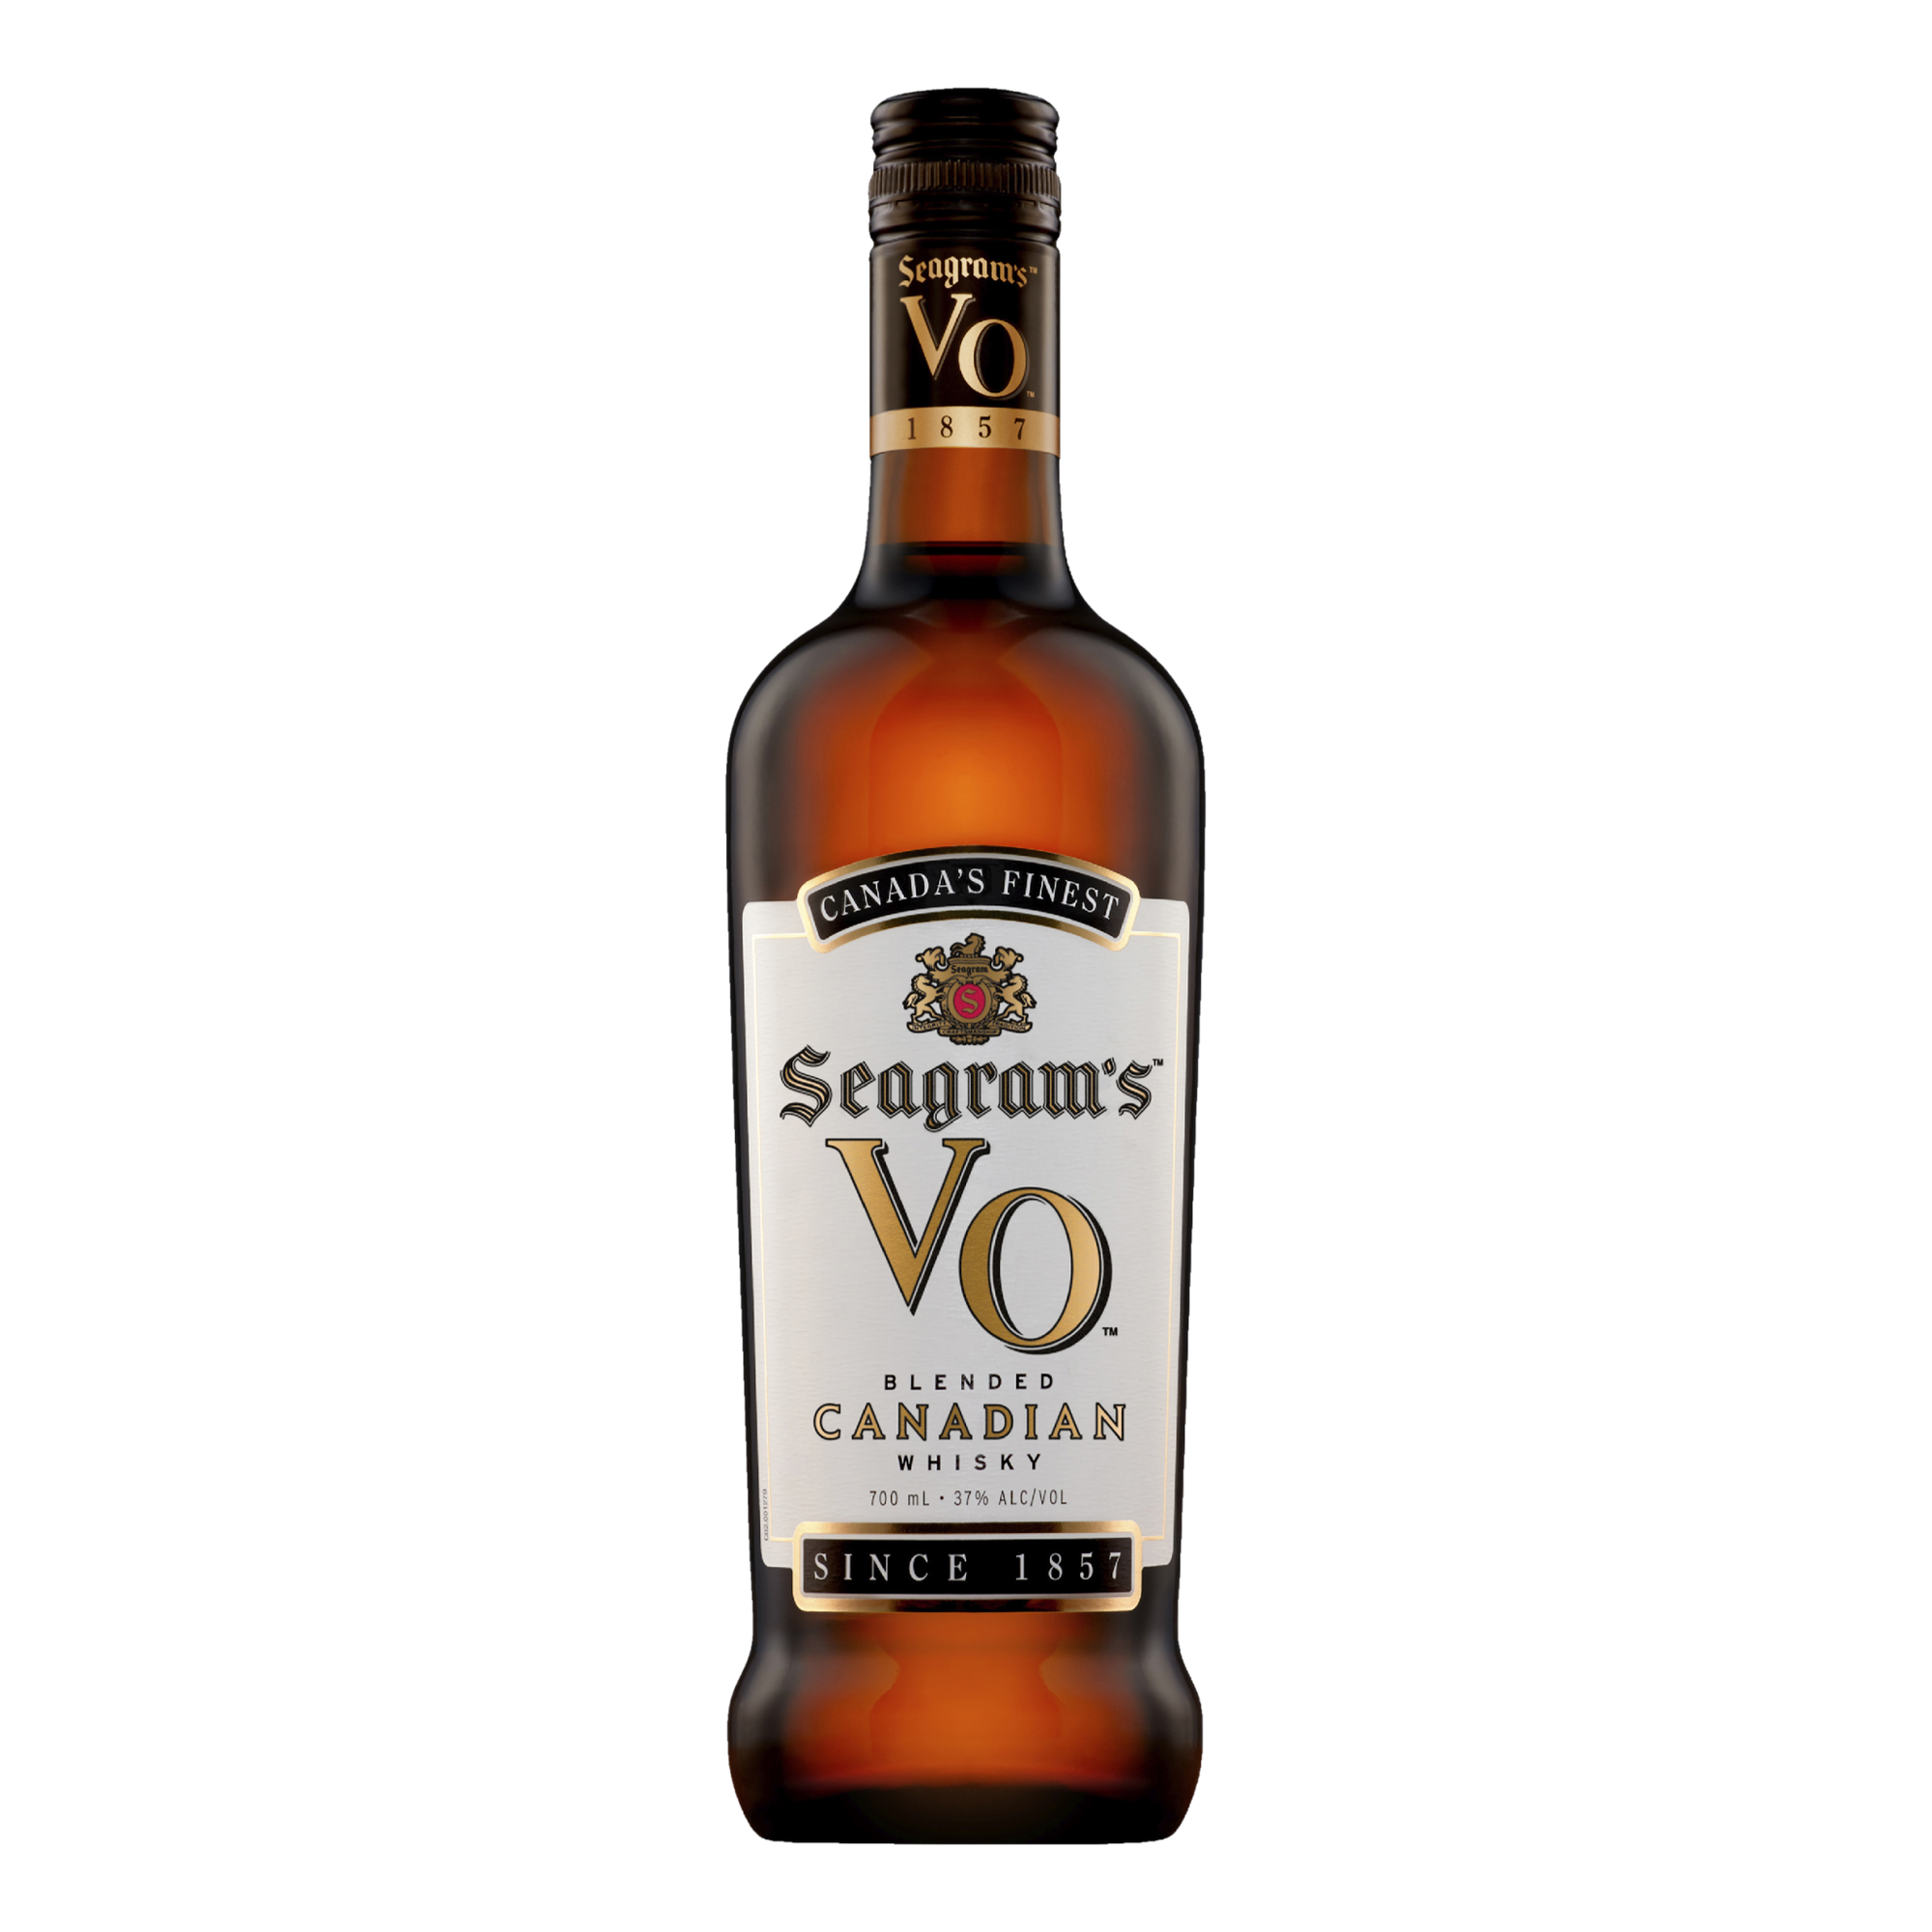 Seagram's VO Blended Canadian Whisky 700ml